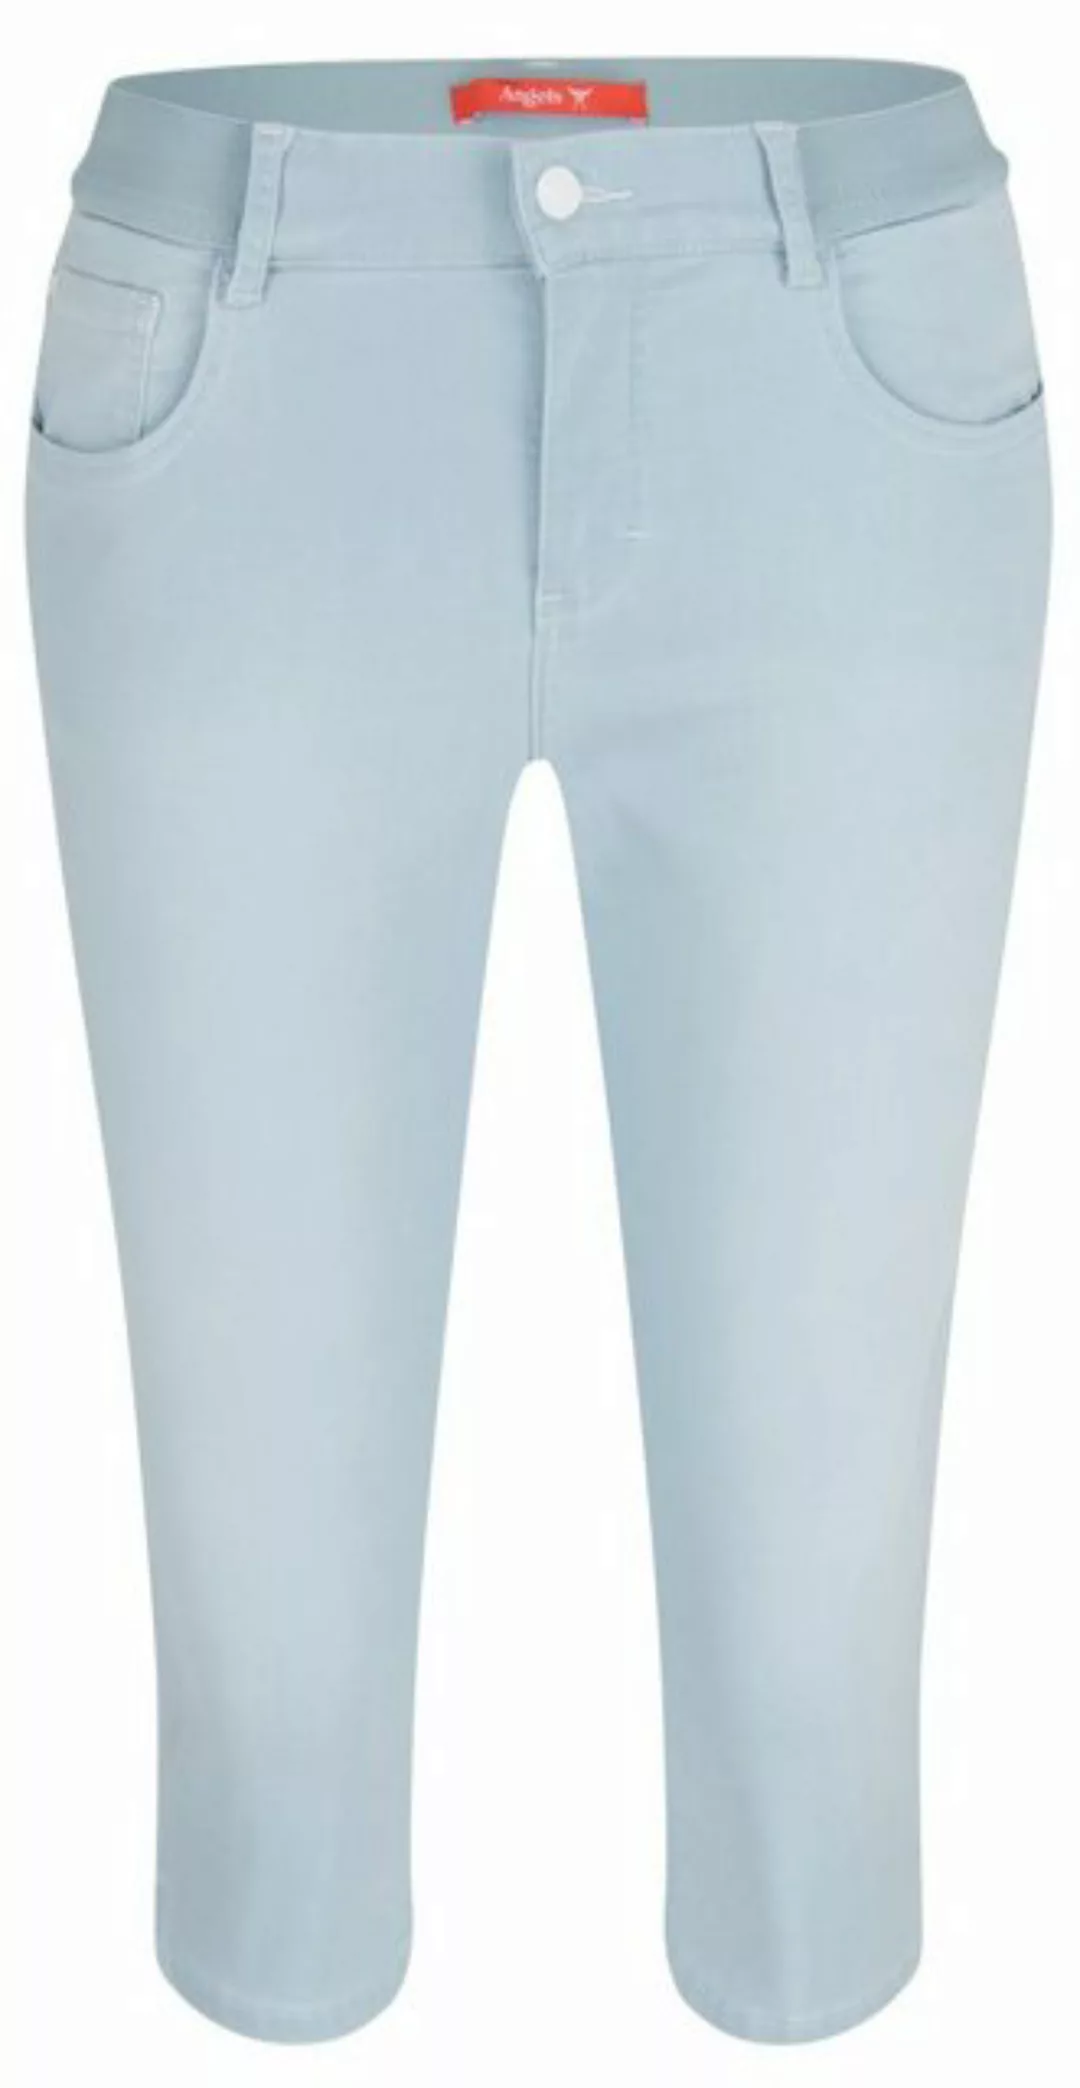 ANGELS Stretch-Jeans ANGELS JEANS ONE SIZE 3/4 CAPRI bleached blue used 399 günstig online kaufen